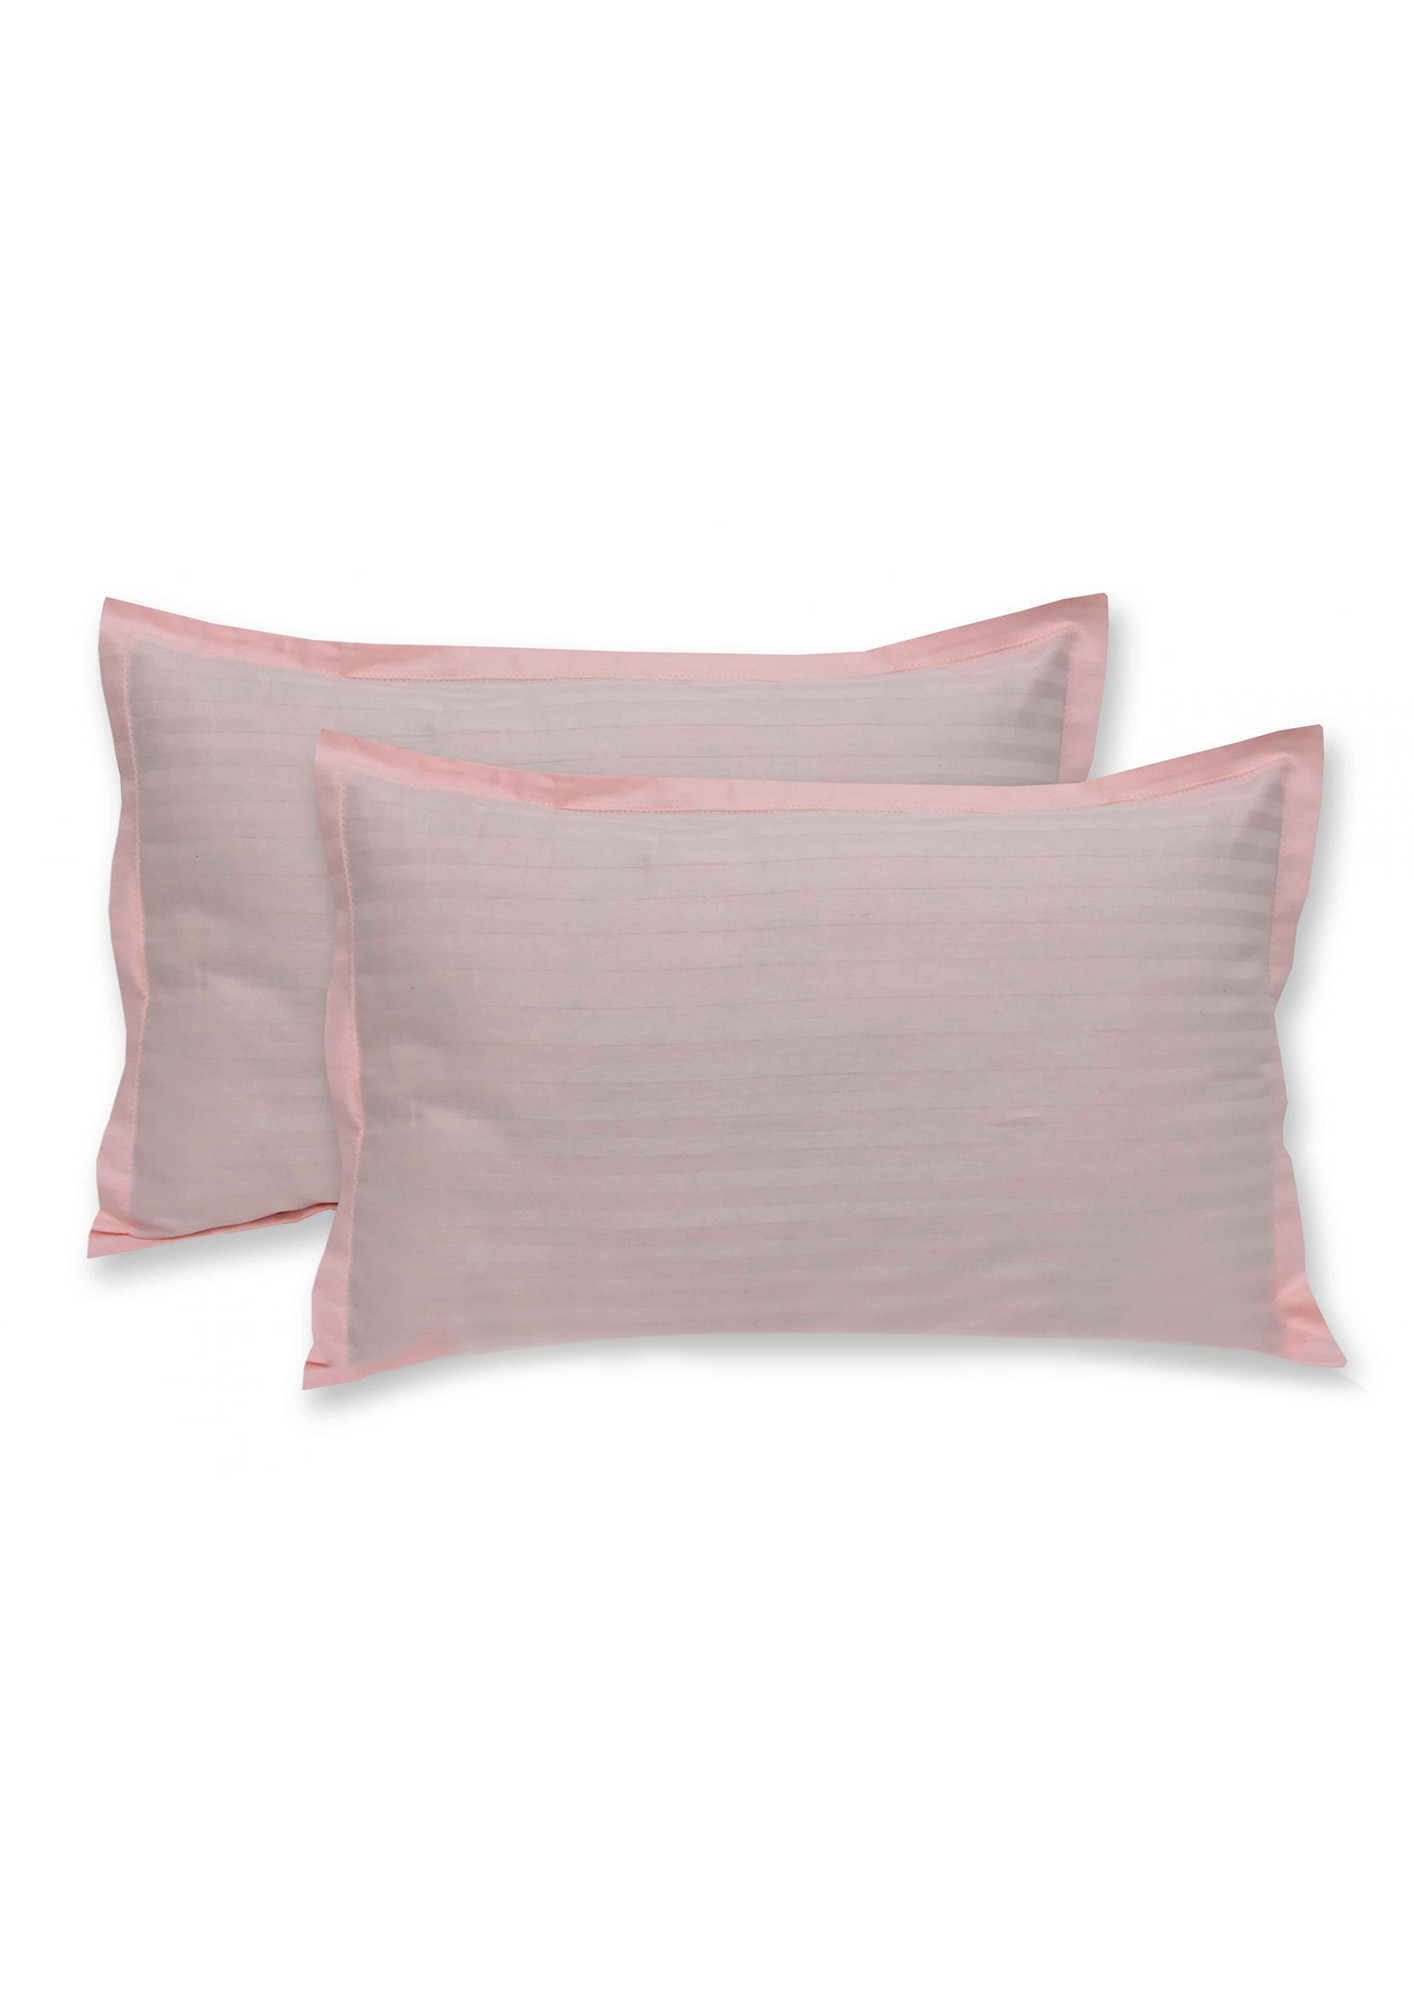 Peach Color Pillow Cover Pair